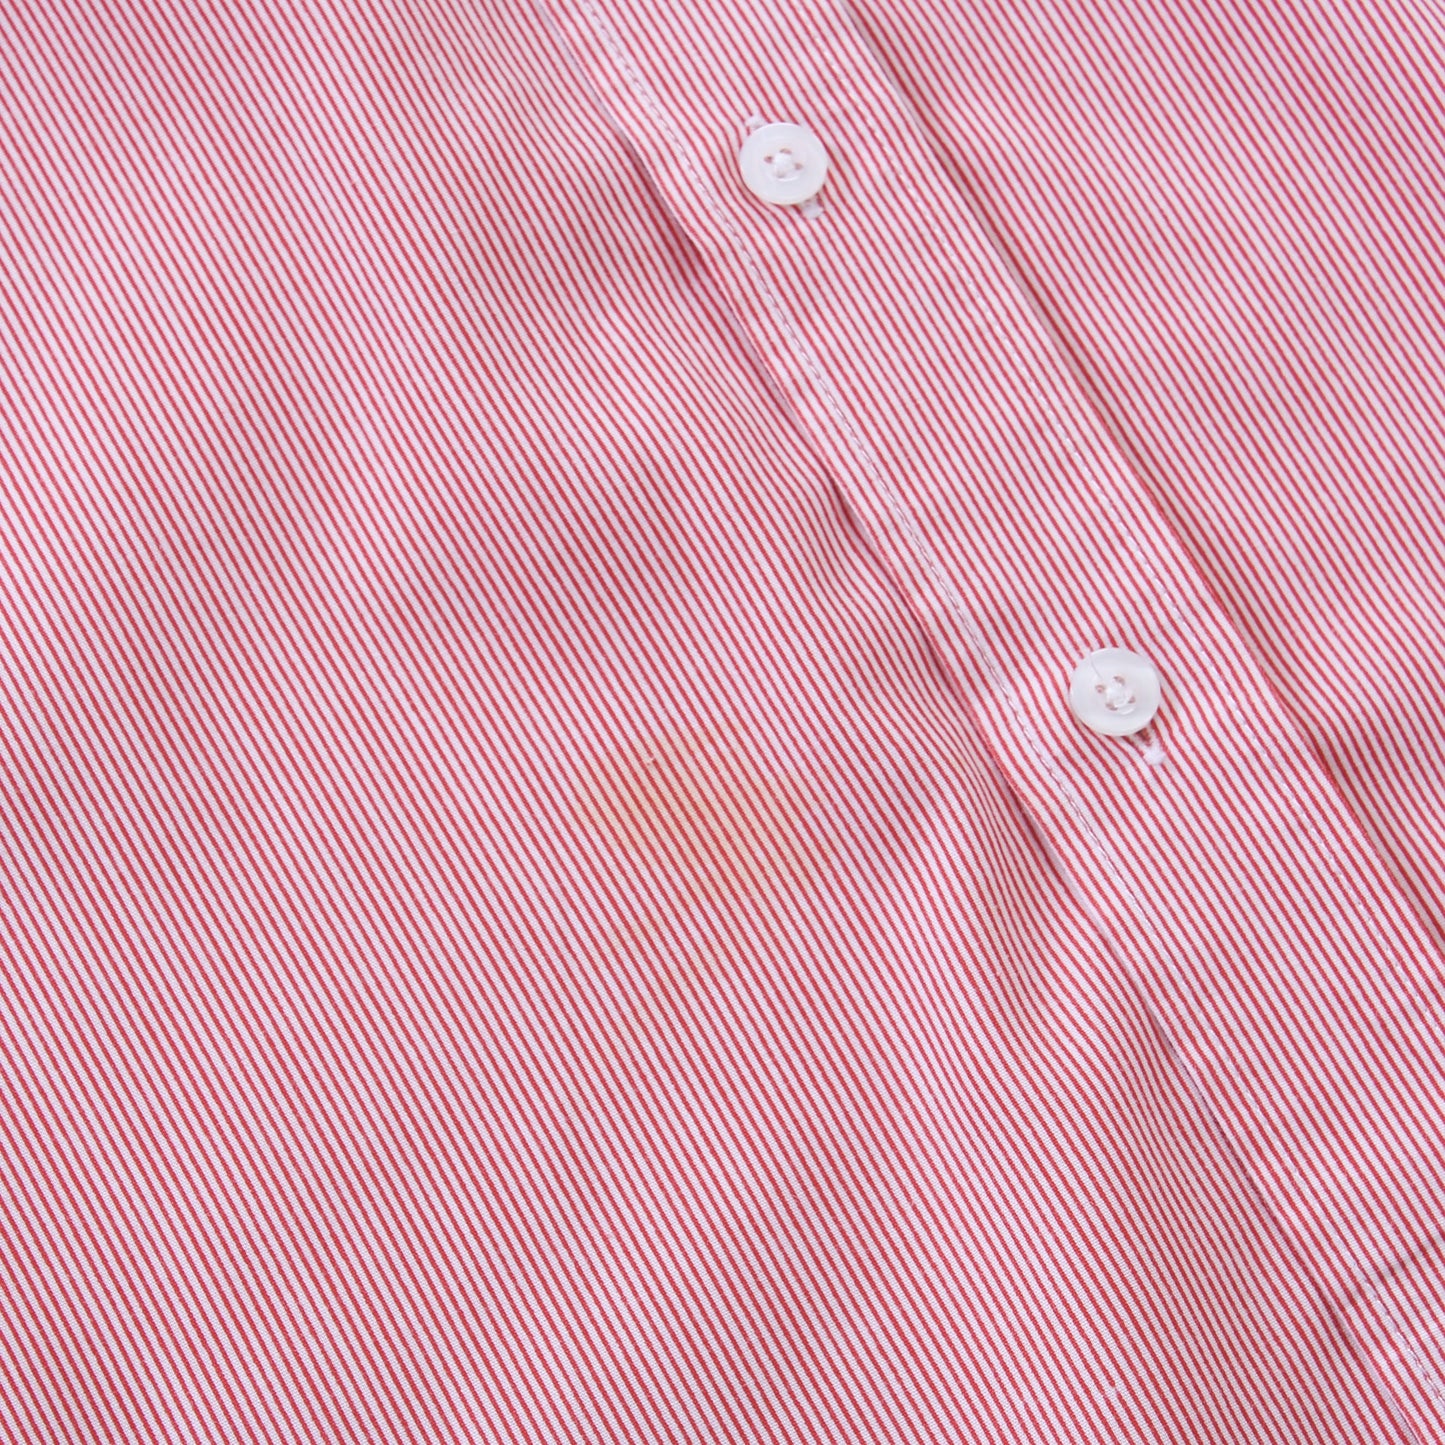 Vintage Shirt - Pink Stripe - American Madness